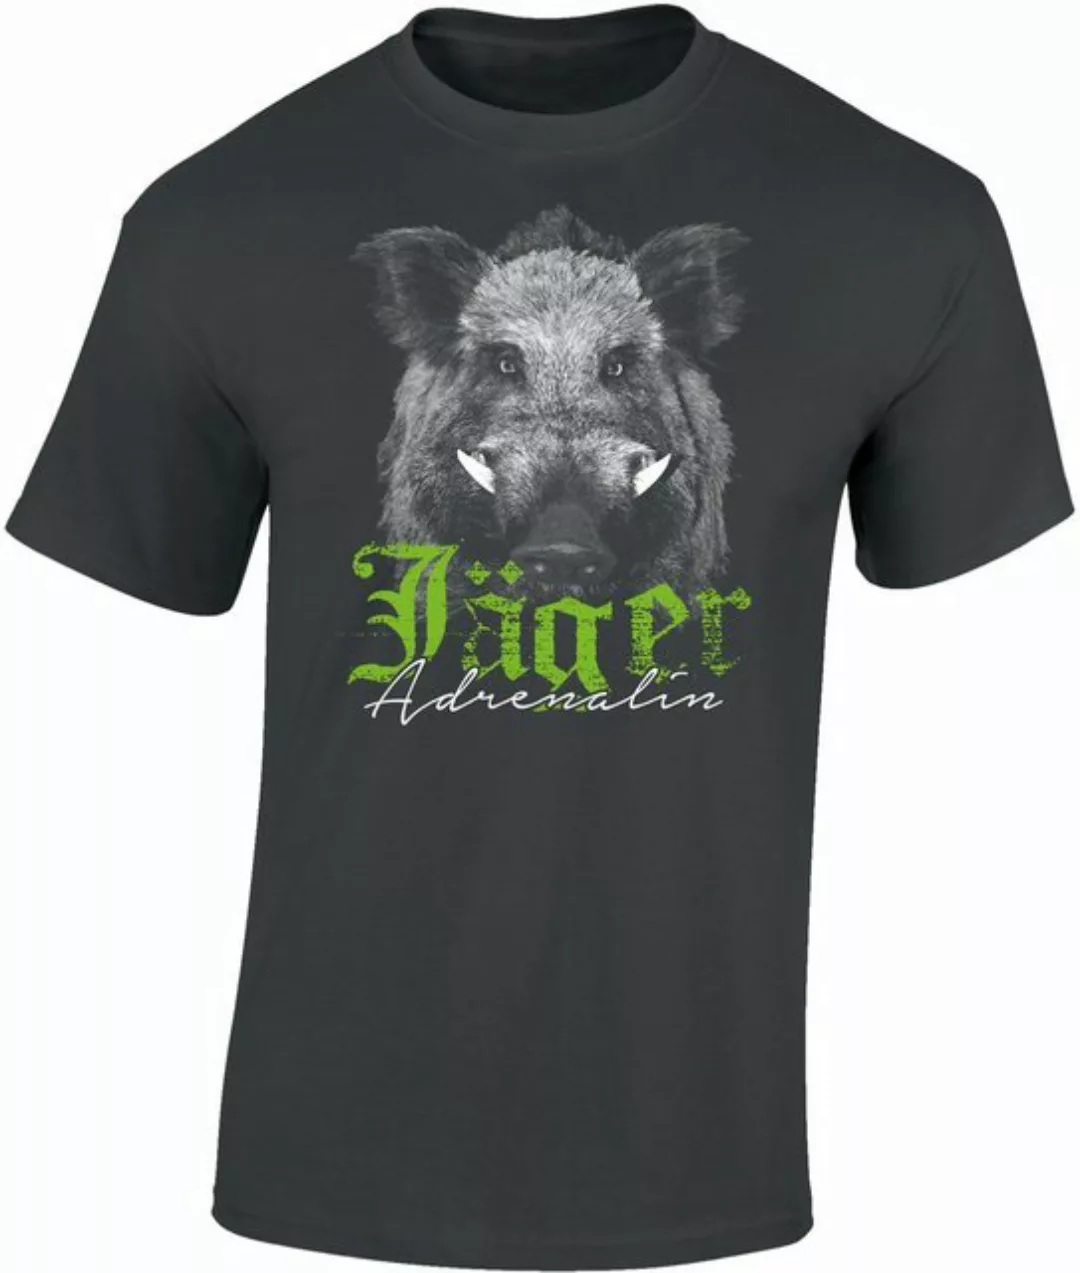 Baddery Print-Shirt Jäger T-Shirt - "Jäger Adrenalin" - Geschenk für Jäger günstig online kaufen